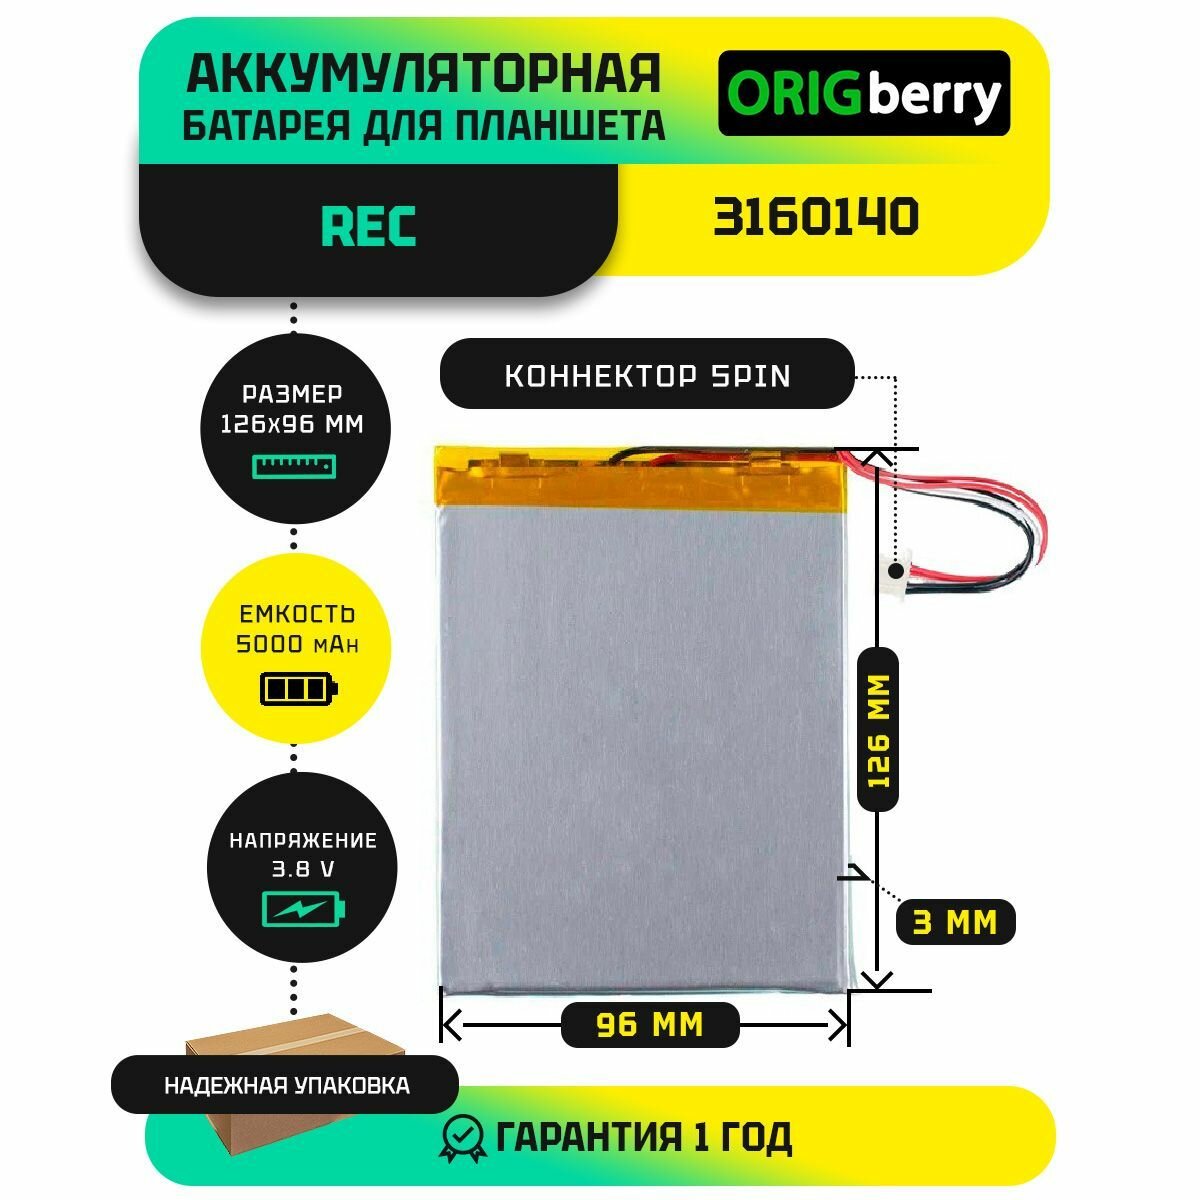 Аккумулятор для планшета REC 3160140 3,8 V / 5000 mAh / 126мм x 96мм x 3мм / коннектор 5 PIN